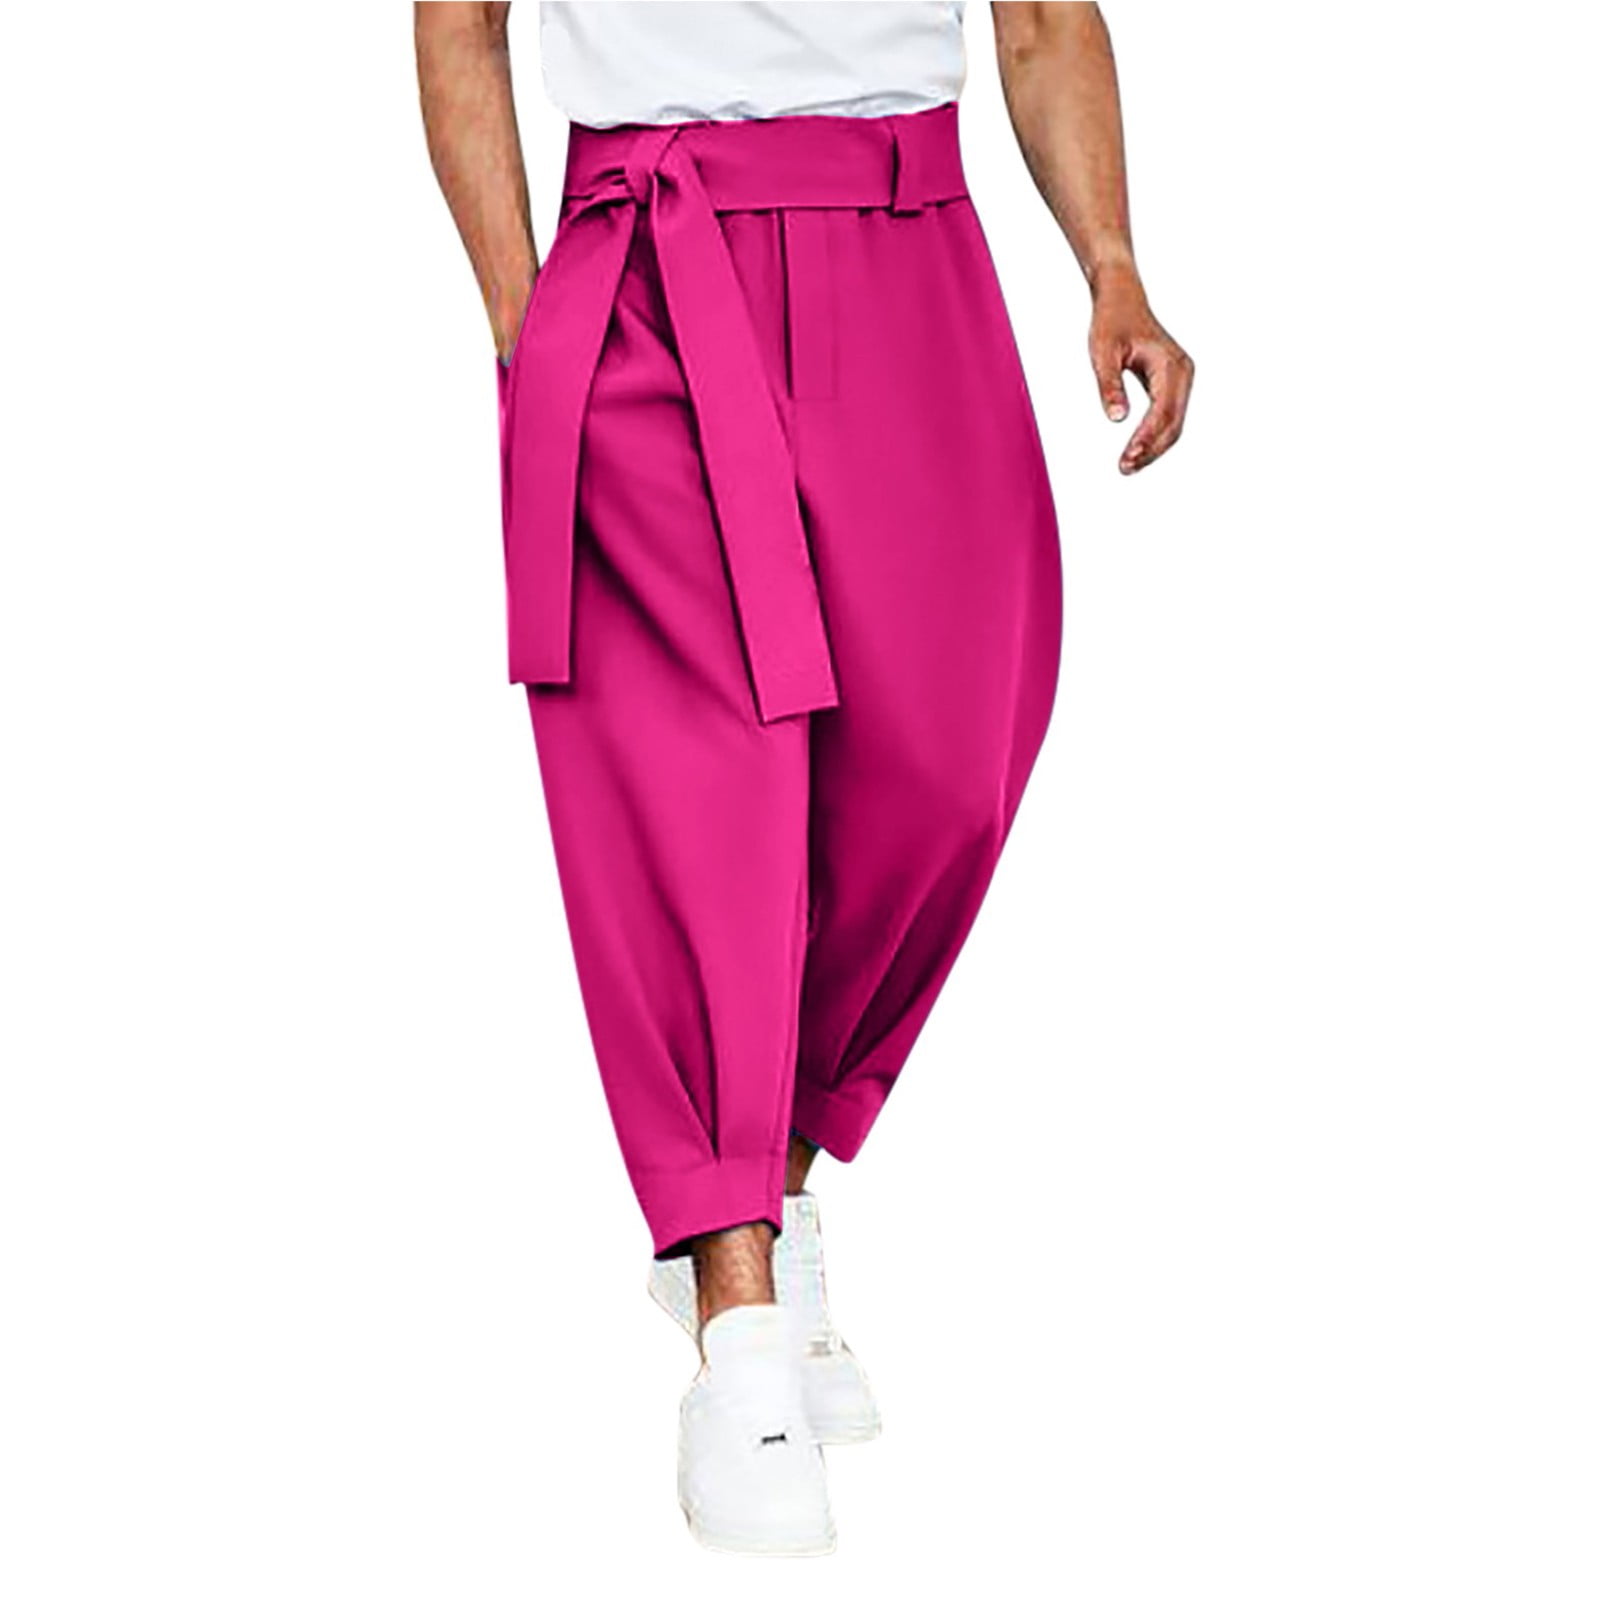 Anthropologie Drew Eva Satin Wide 90s party Pants pink color sz M | eBay